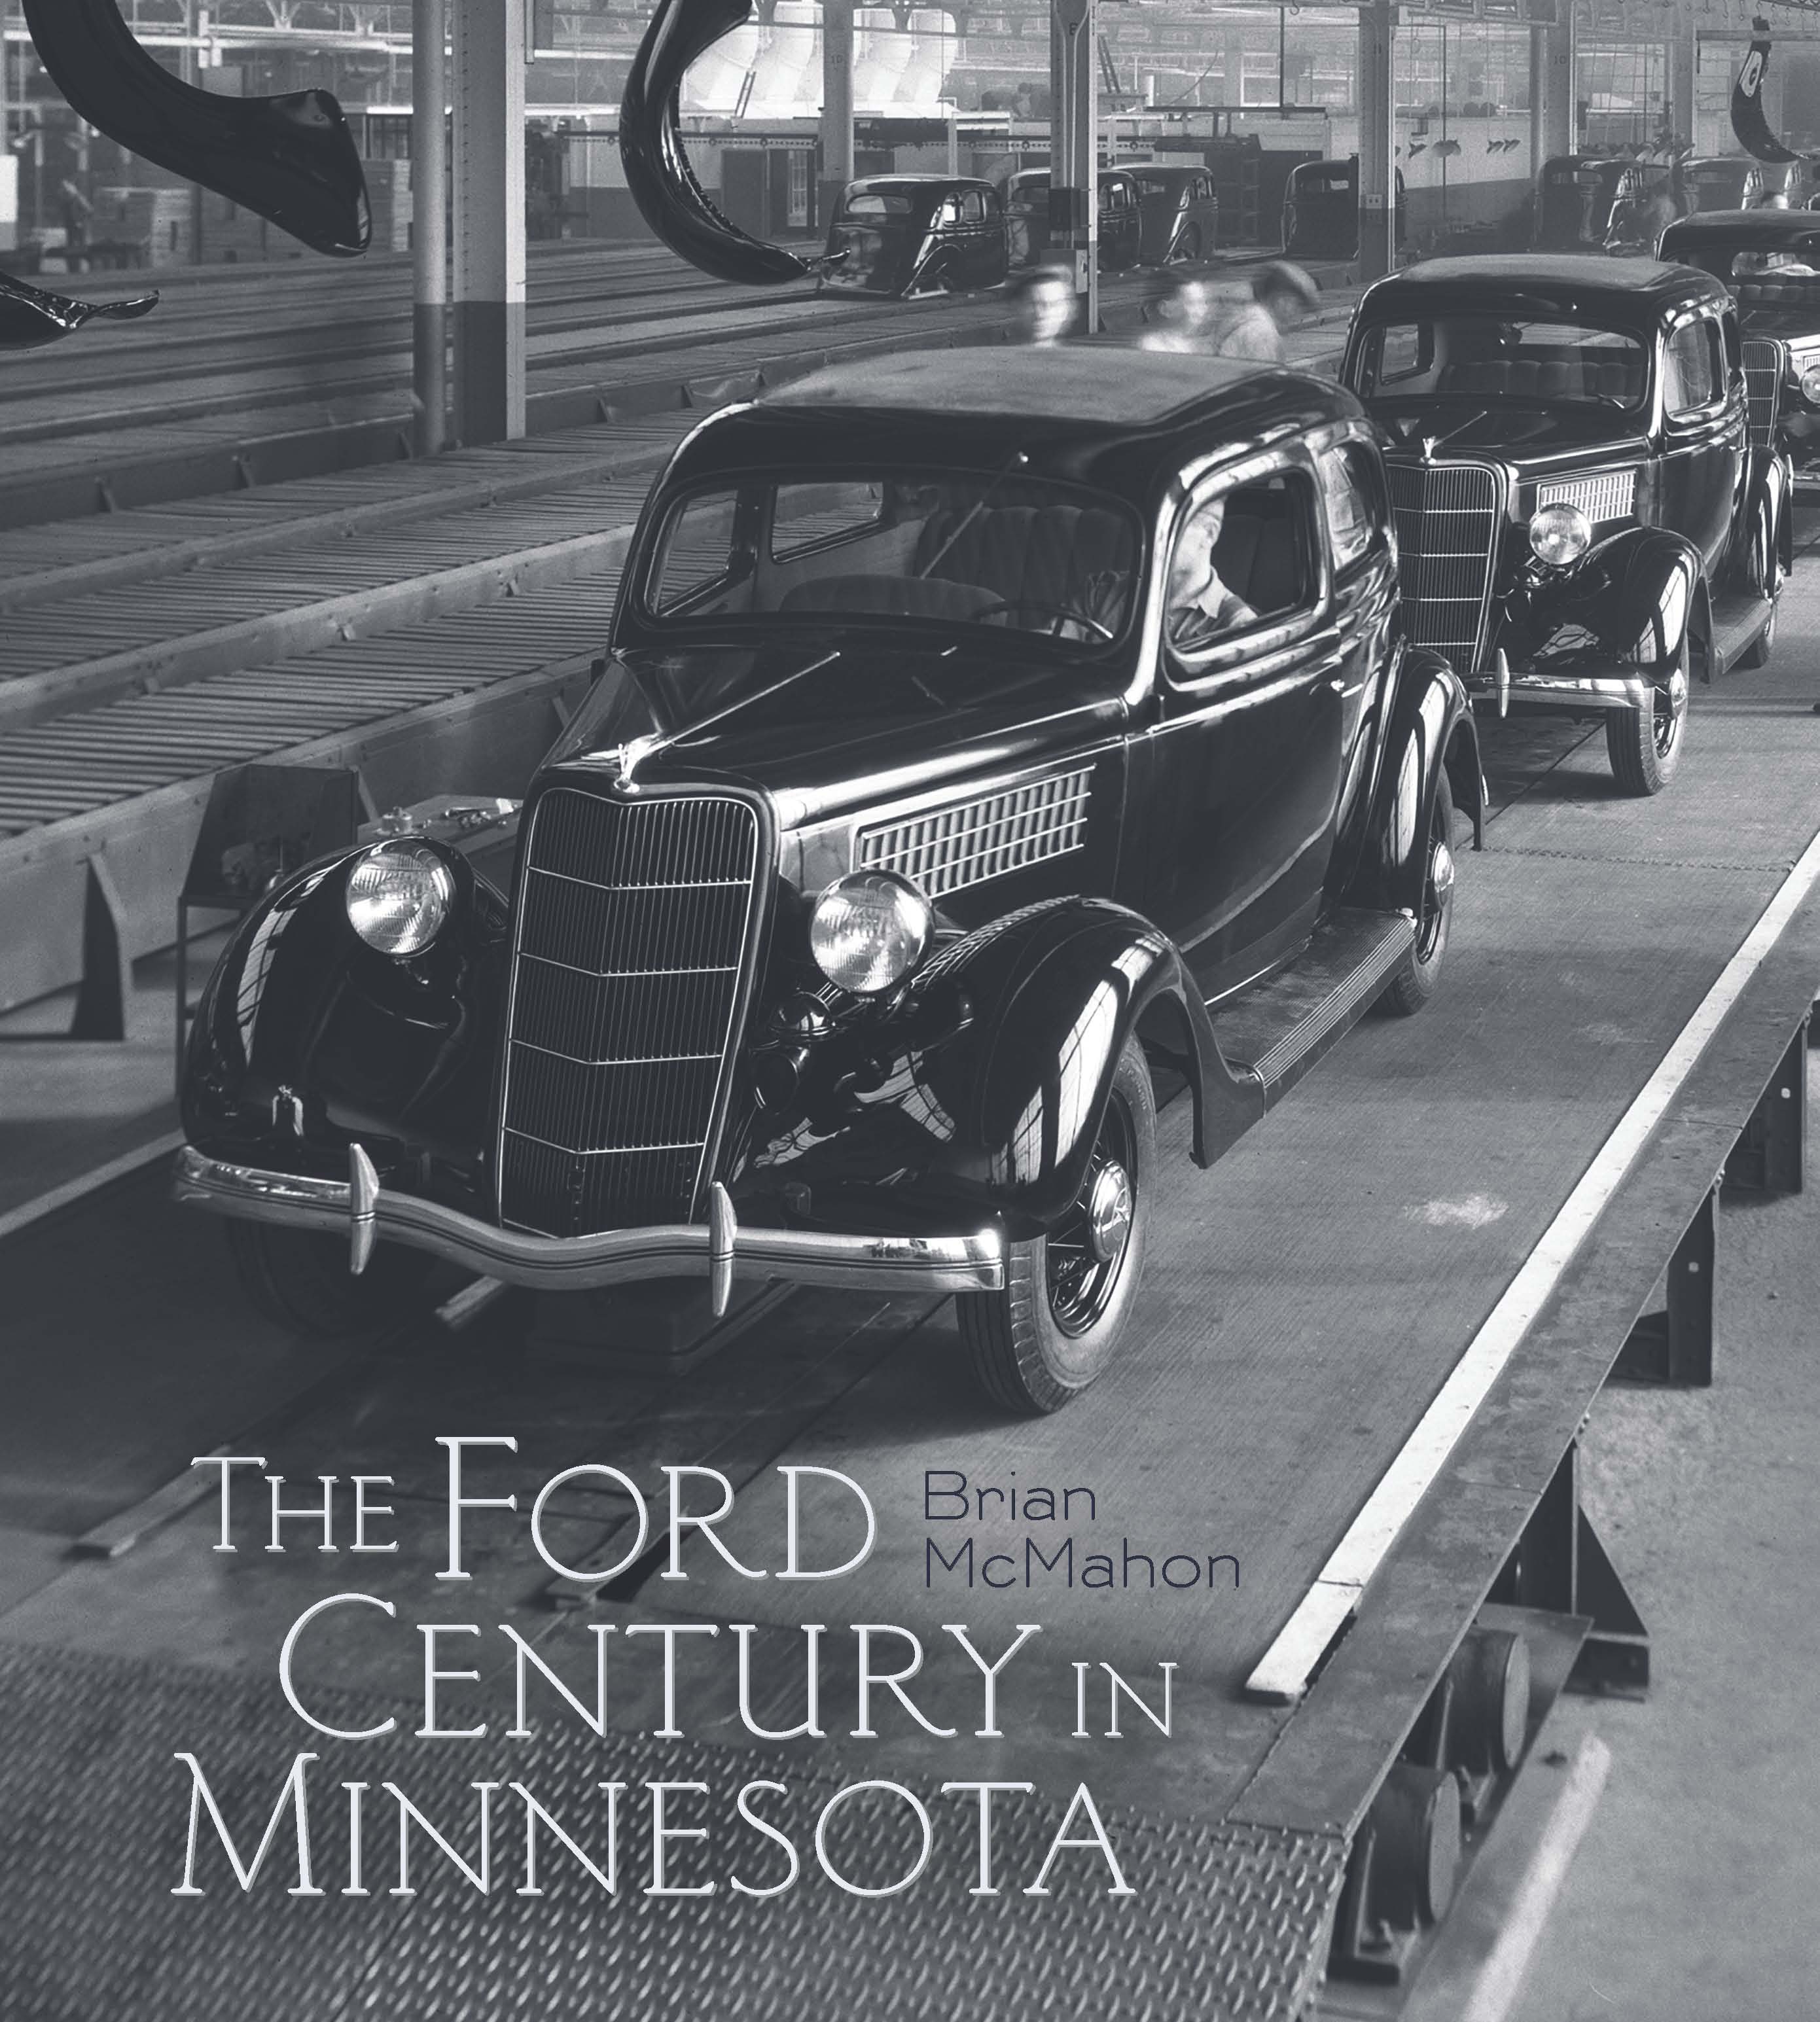 Ford Century in Minnesota